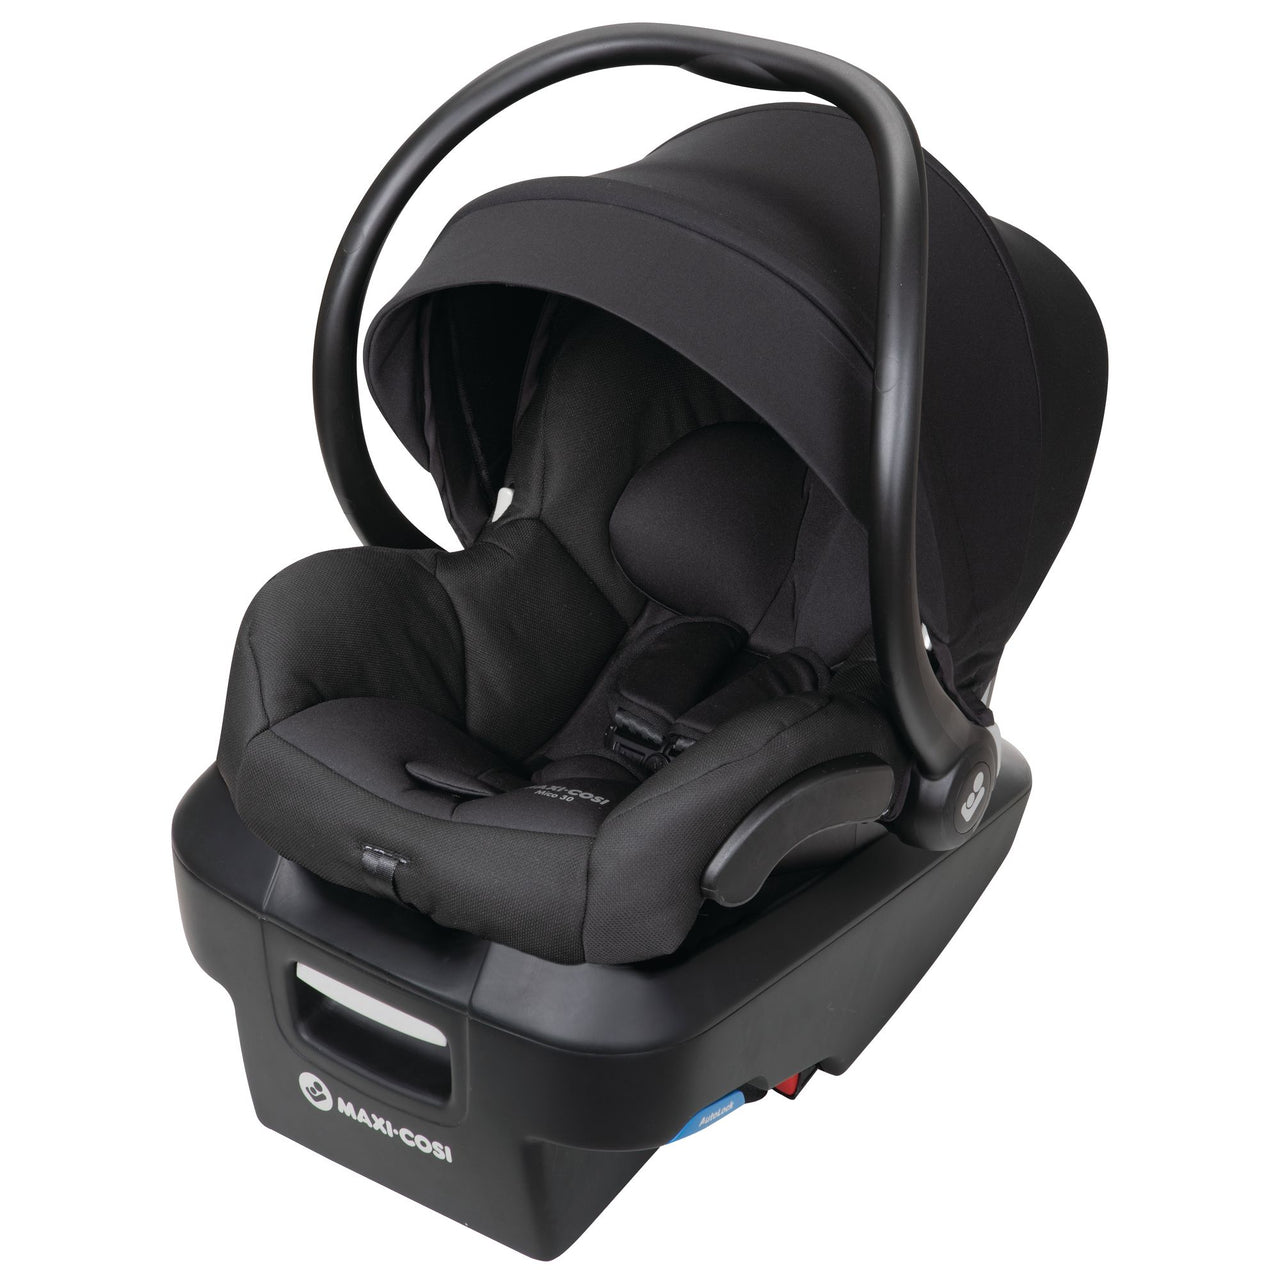 MAXI COSI Mico 30 Infant Car Seat